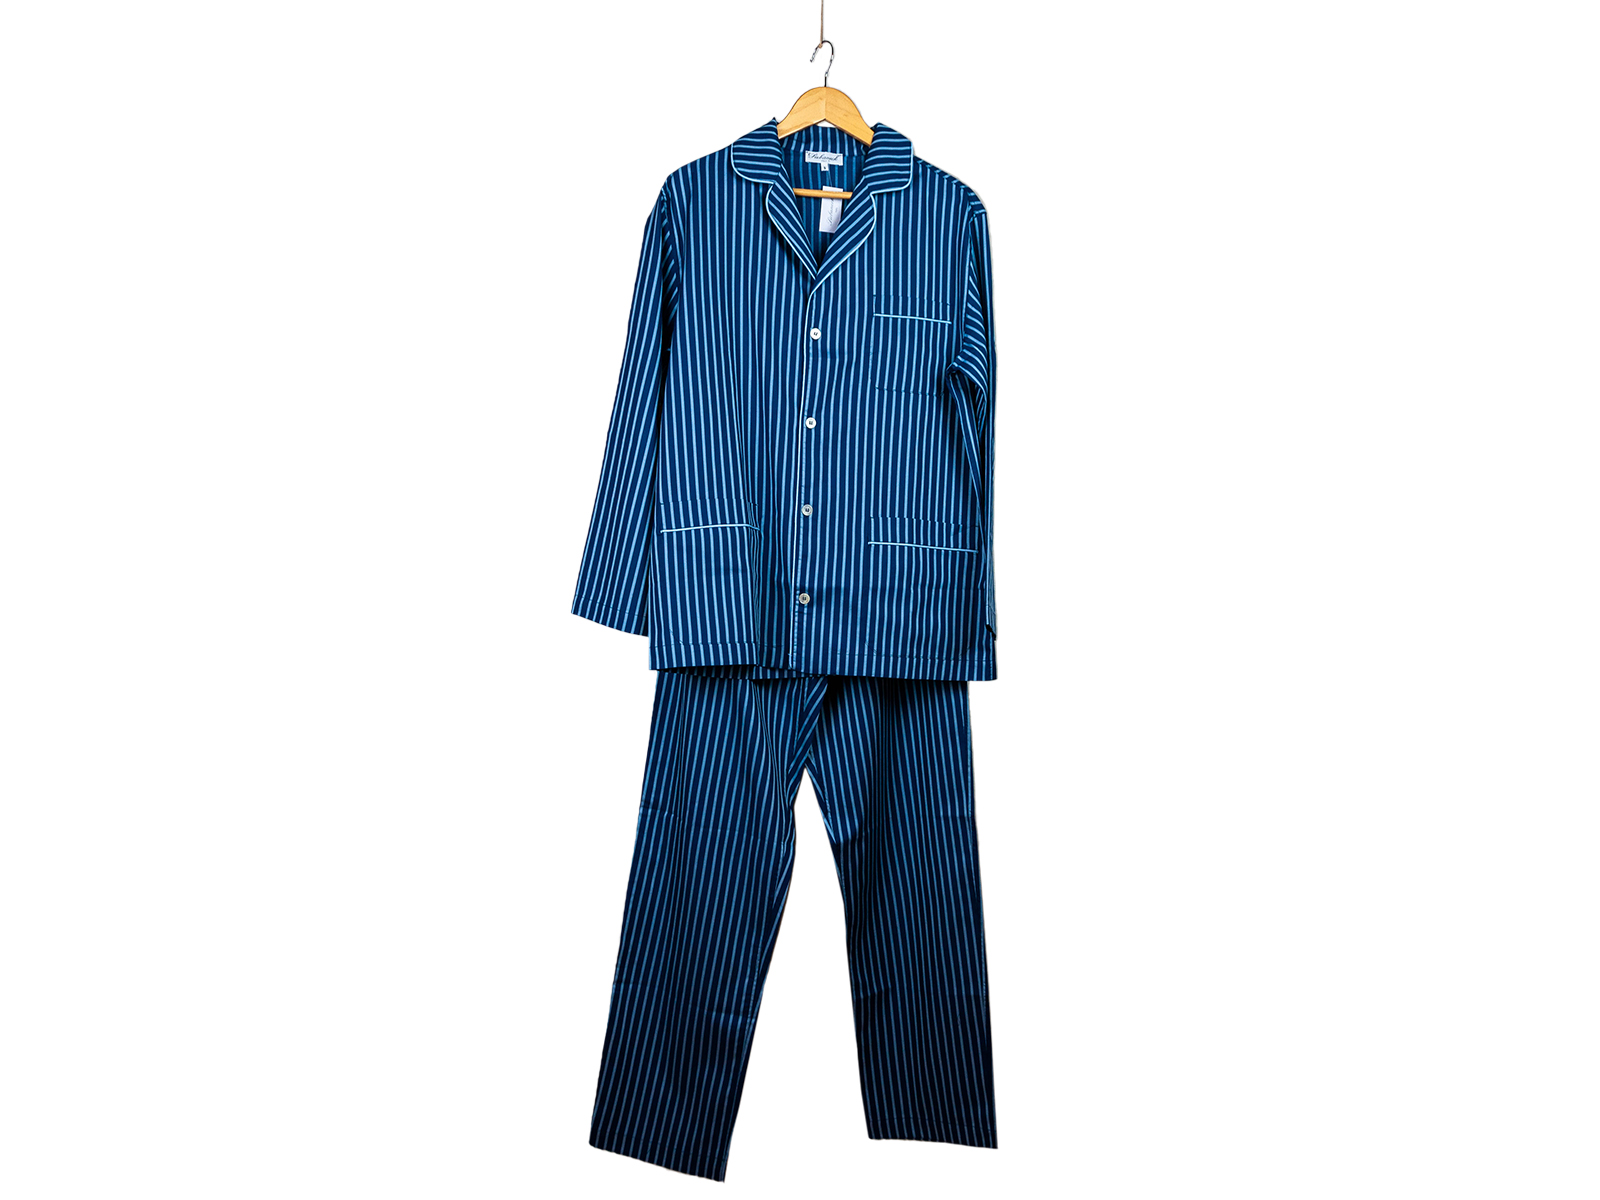  Siebaneck, i pigiami artigianali italiani: - uomo  - mod. 1 uomo blu rigato azzurro 